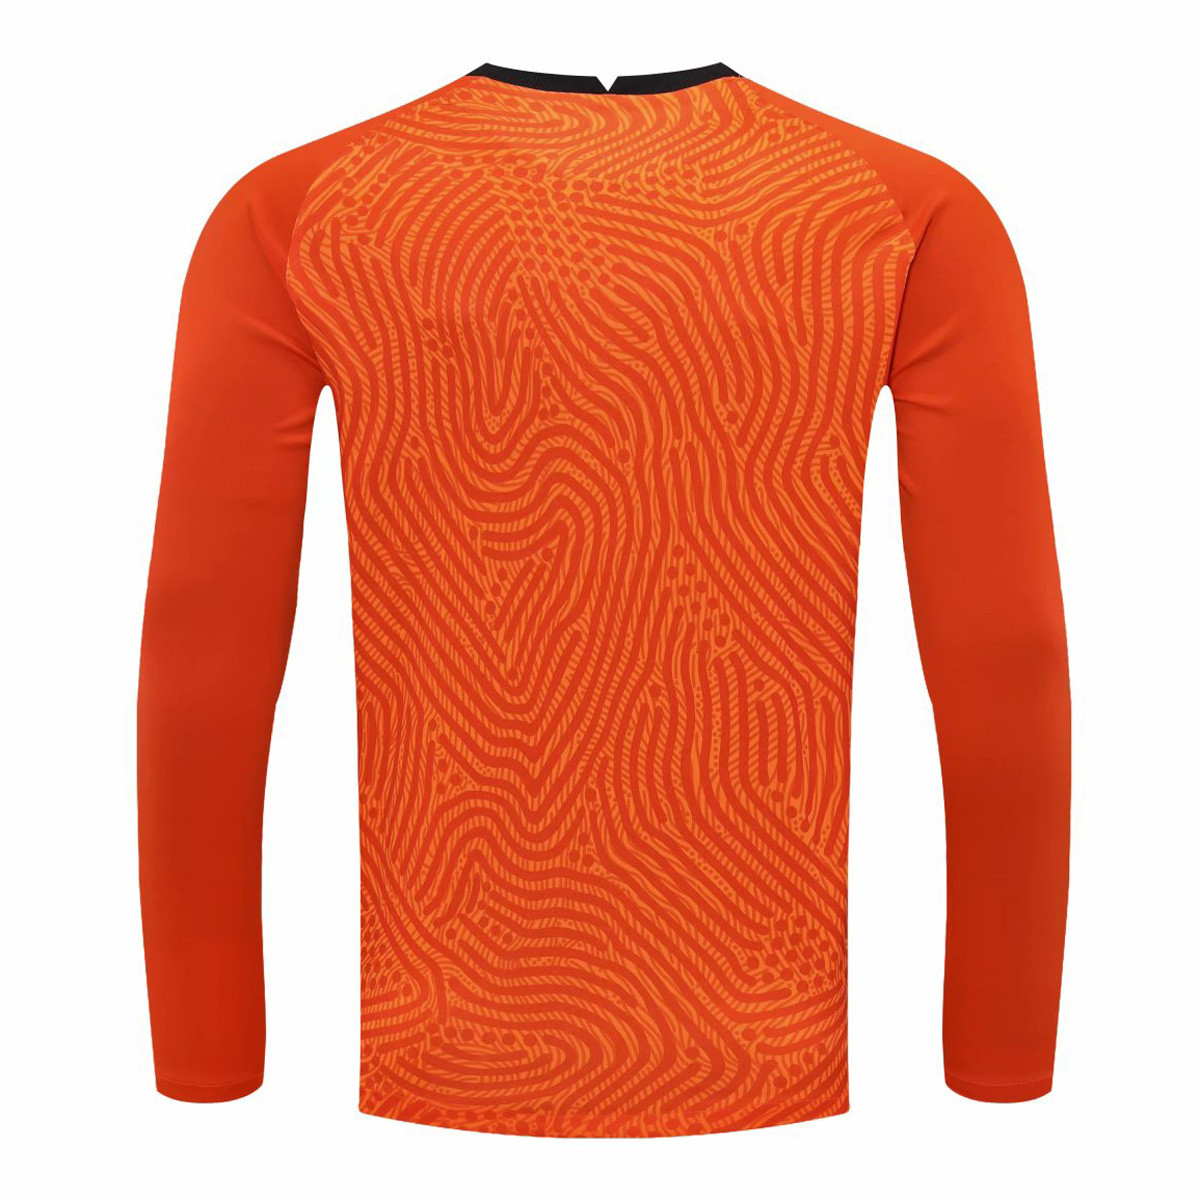 US$ 16.80  PSG Goalkeeper Orange Long Sleeve Jersey Mens 2020/21  www